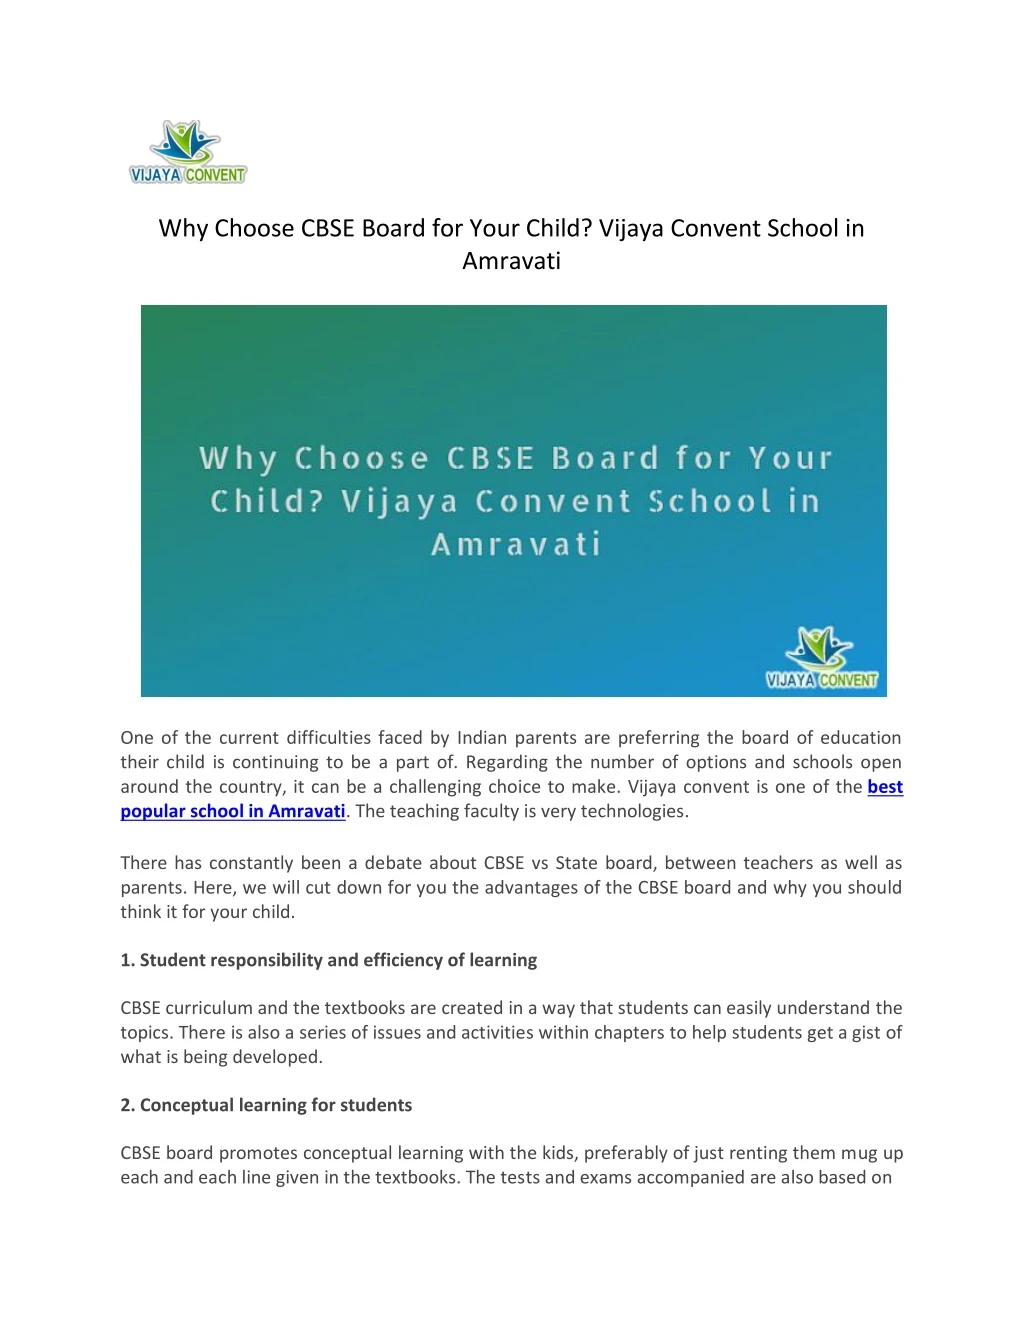 why choose cbse board for your child vijaya